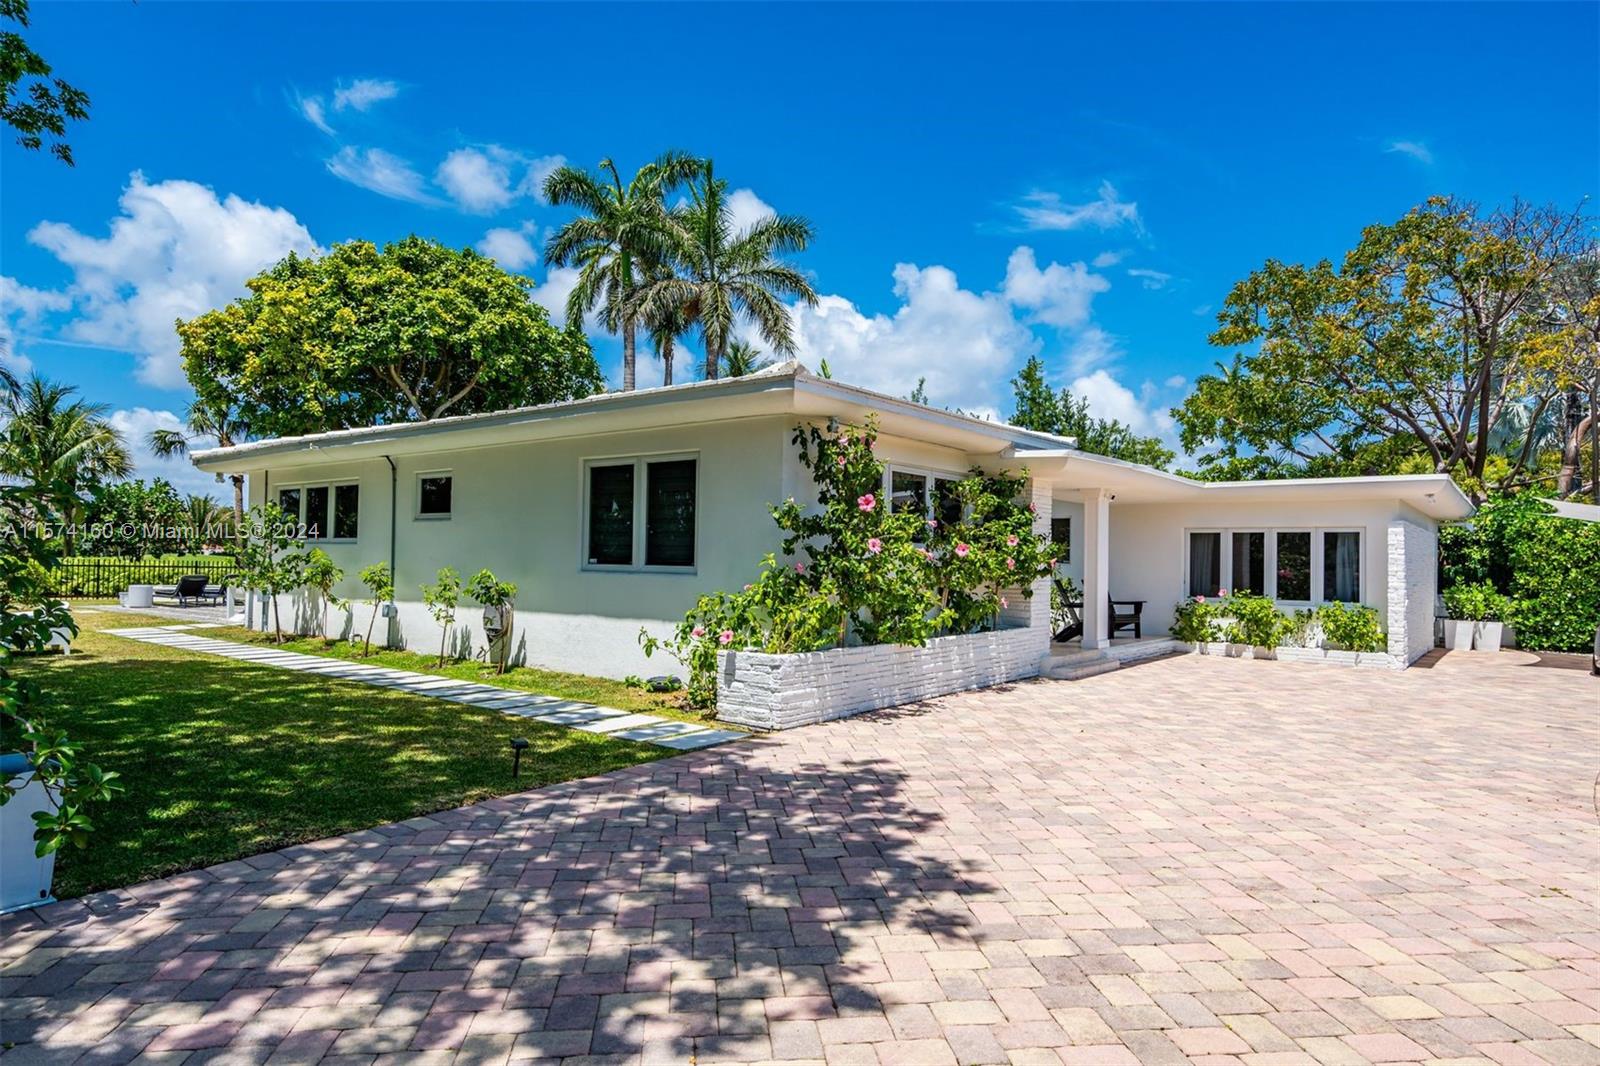 Property for Sale at 6100 La Gorce Dr, Miami Beach, Miami-Dade County, Florida - Bedrooms: 4 
Bathrooms: 3  - $3,990,000